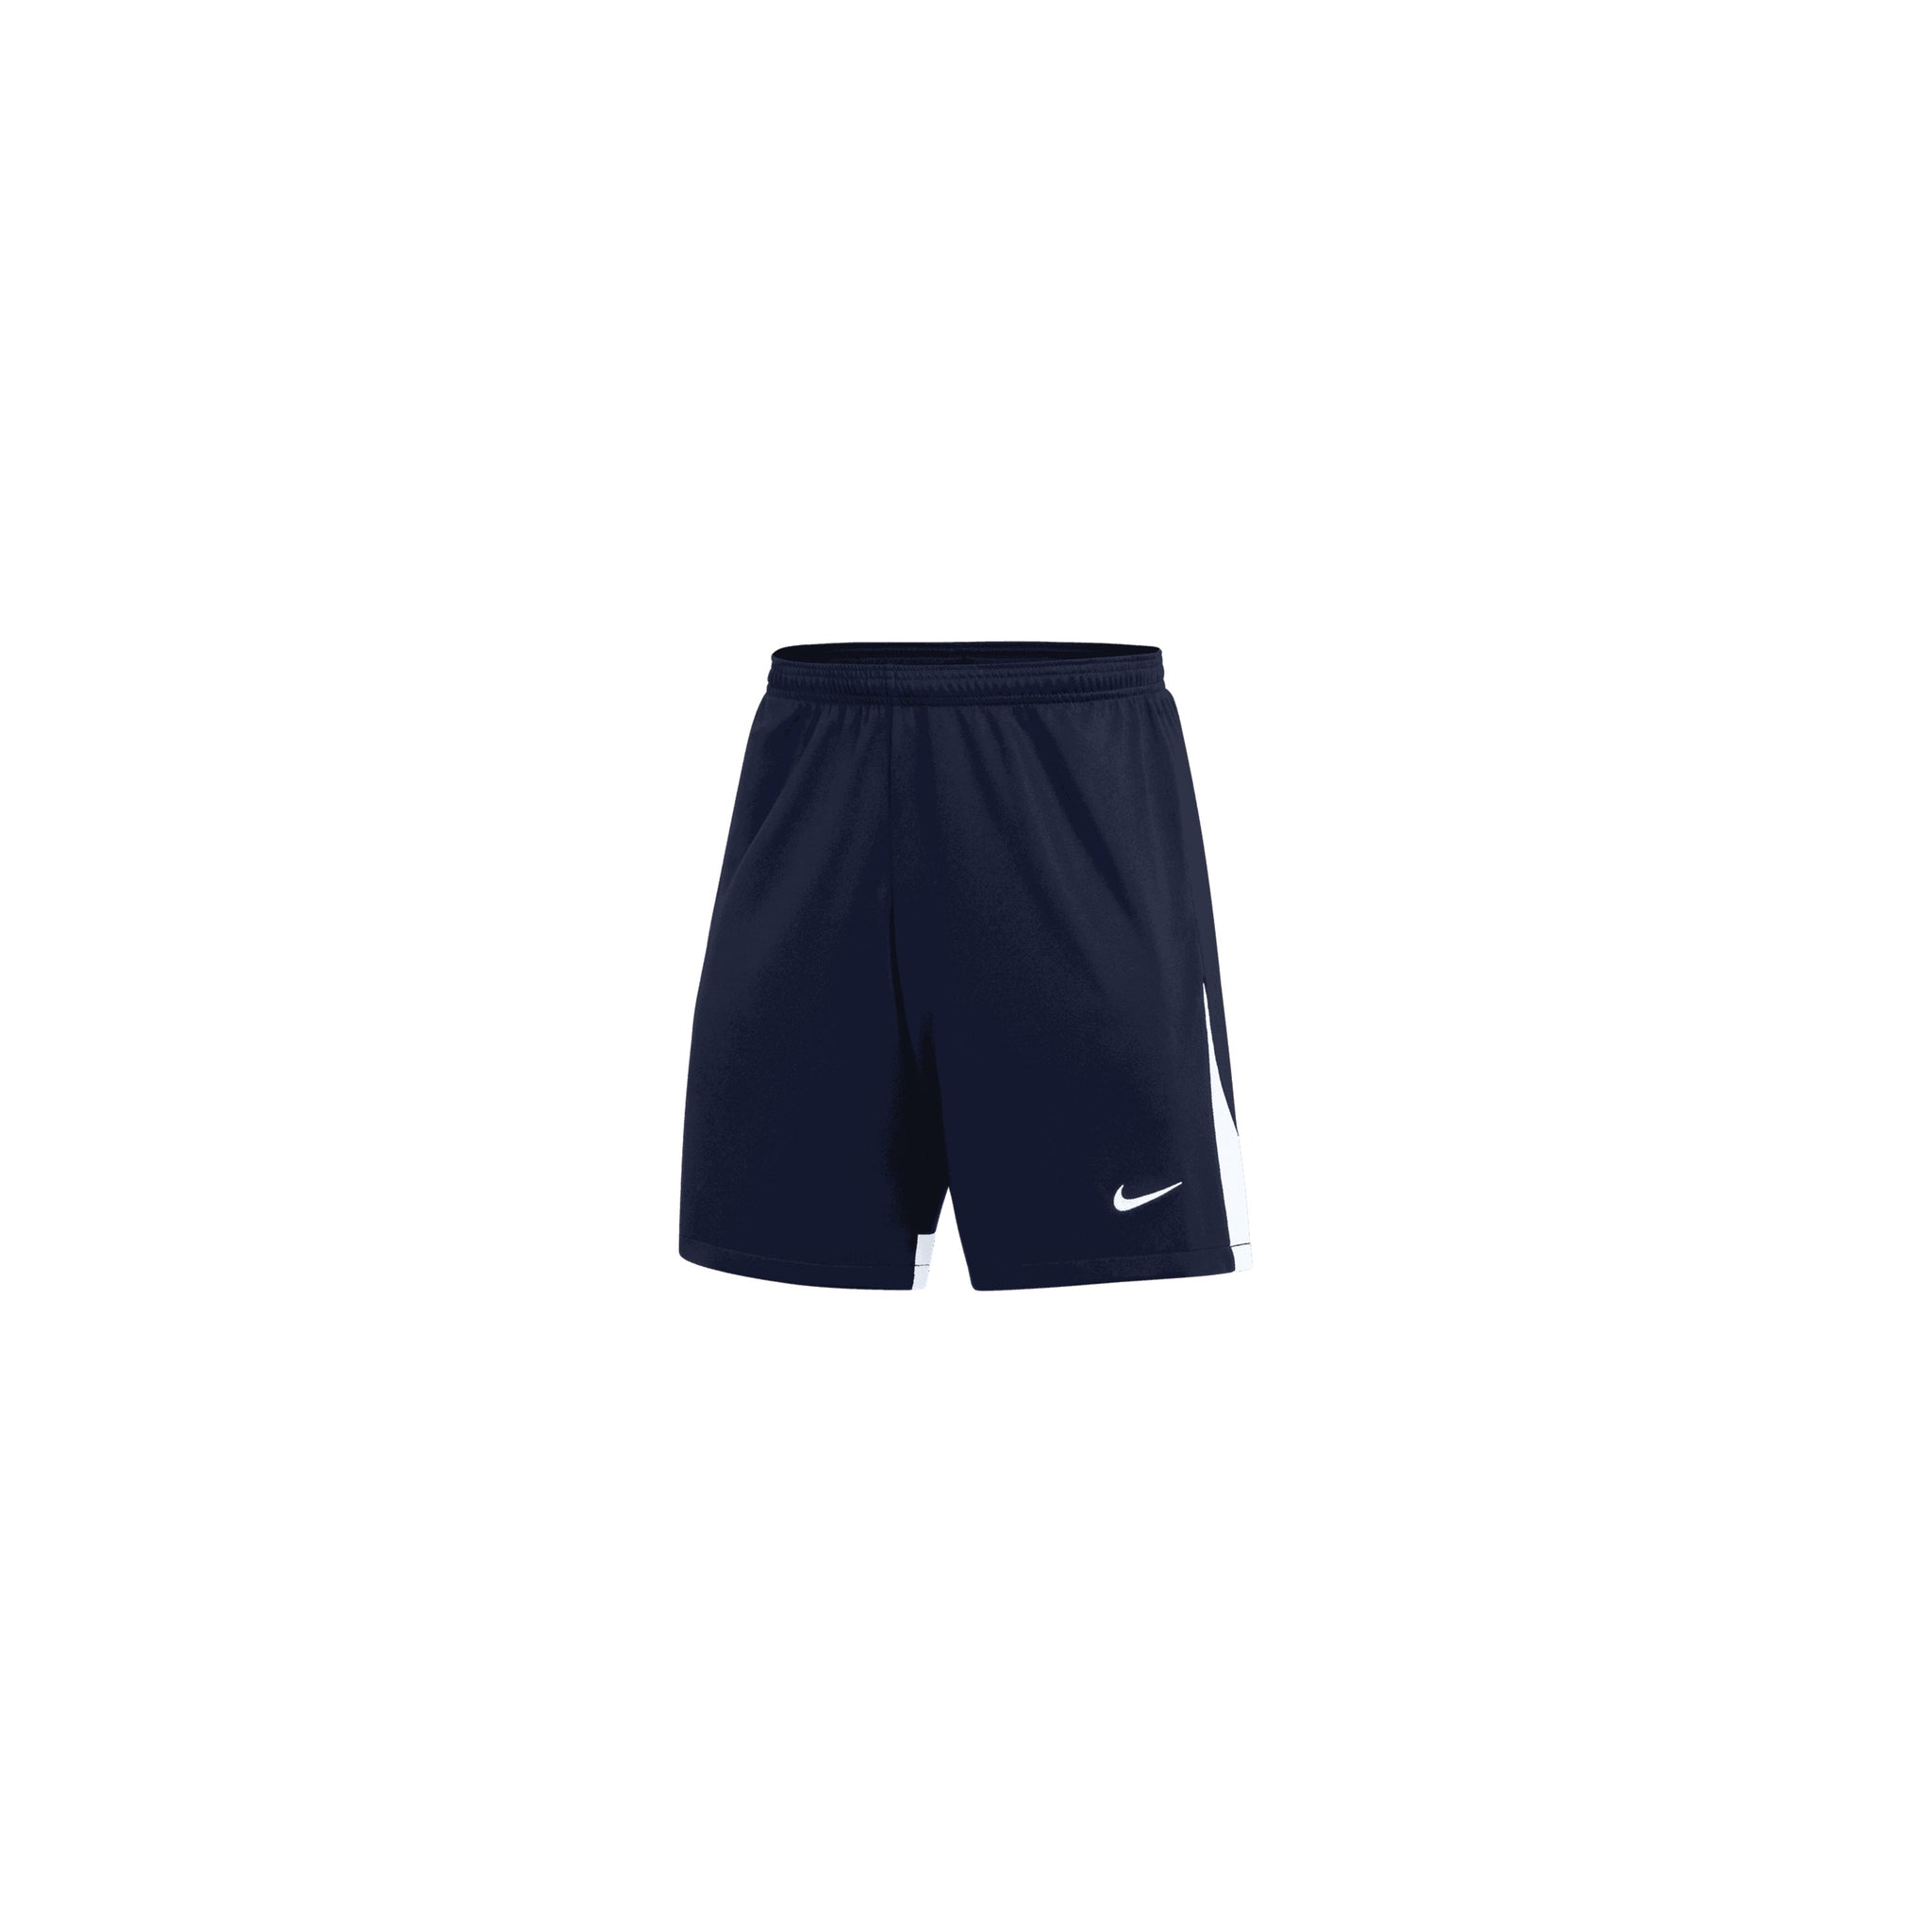 NIKE Dry League Knit II (W) Shorts